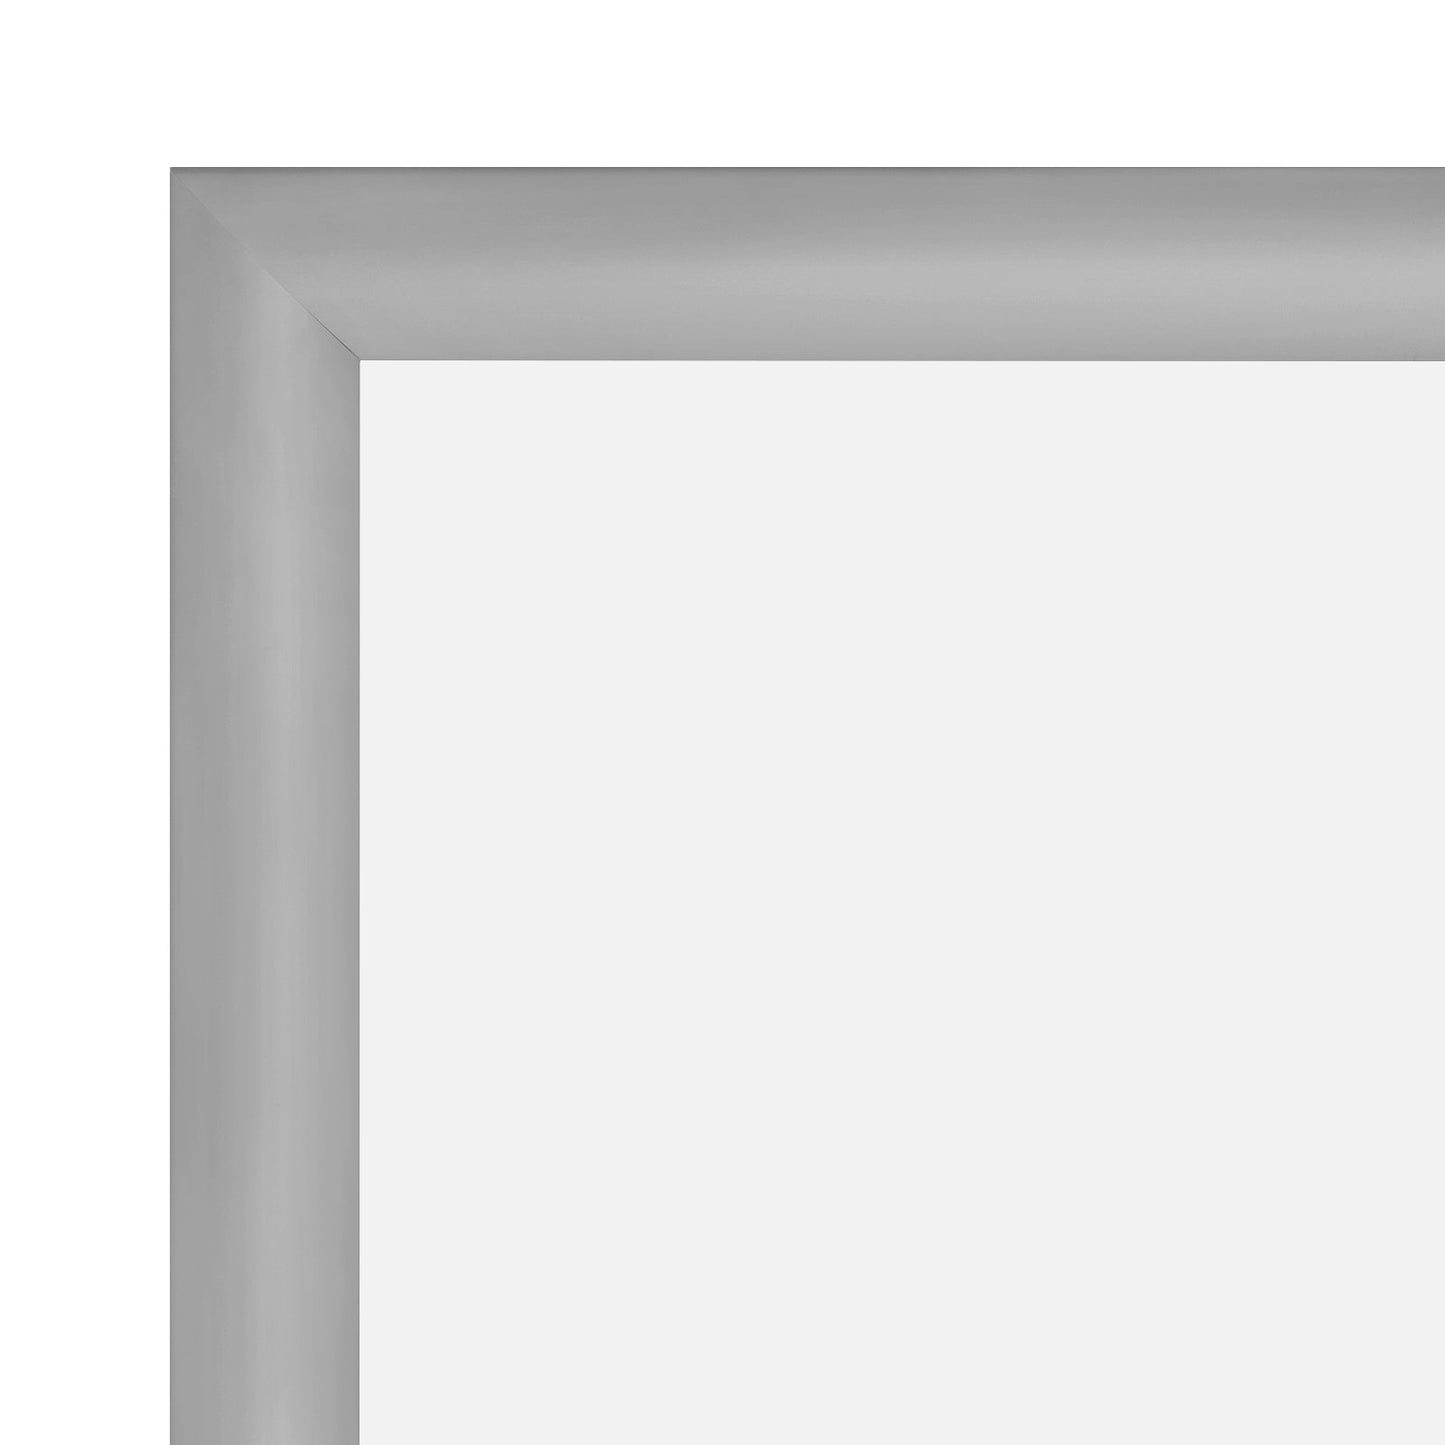 21x31 Silver SnapeZo® Snap Frame - 1.2" Profile - Snap Frames Direct